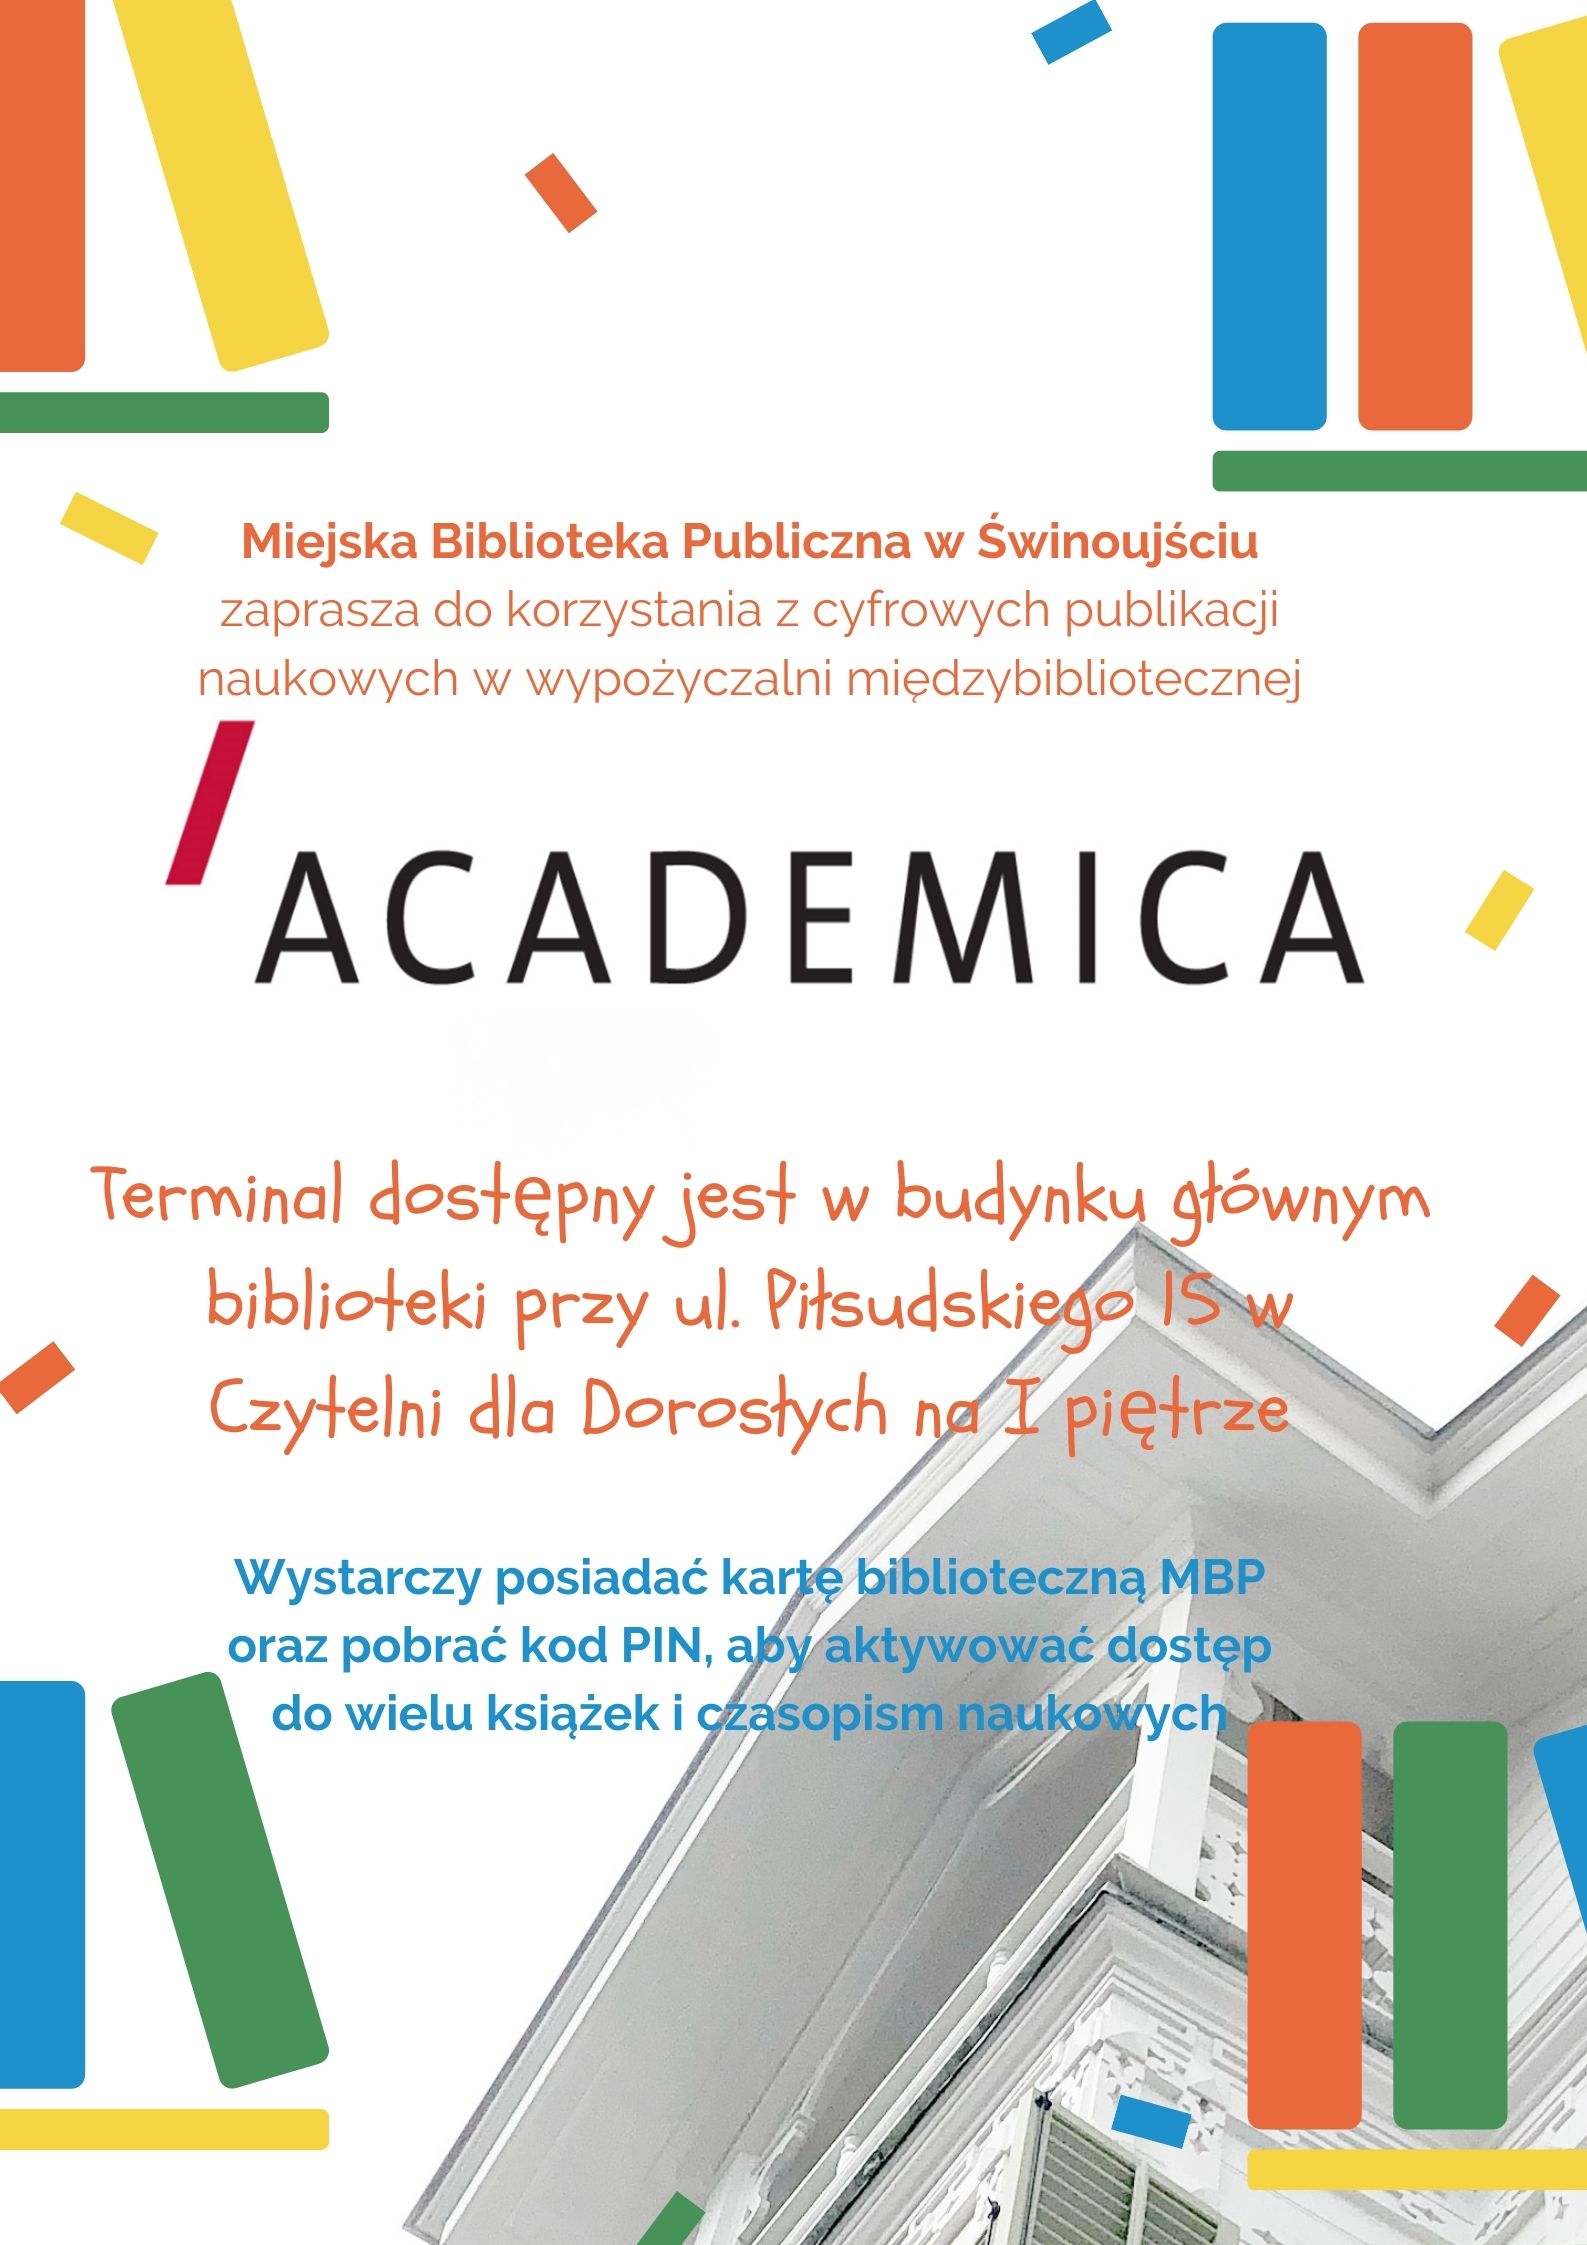 Plakat academica